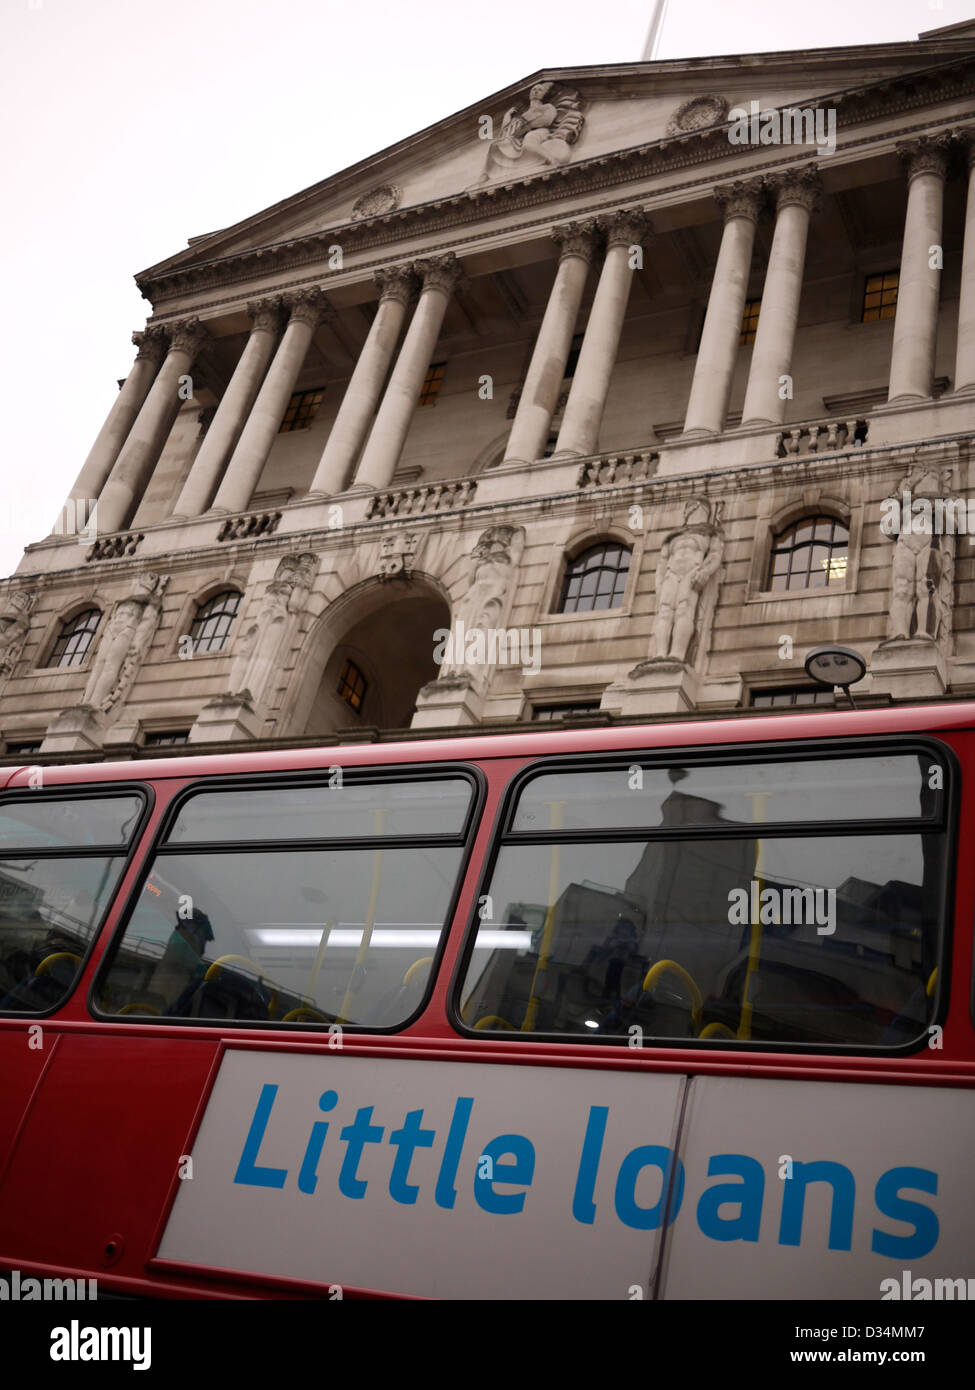 little loans on bus outside Bank of England, government lending borrowing theme Stock Photo